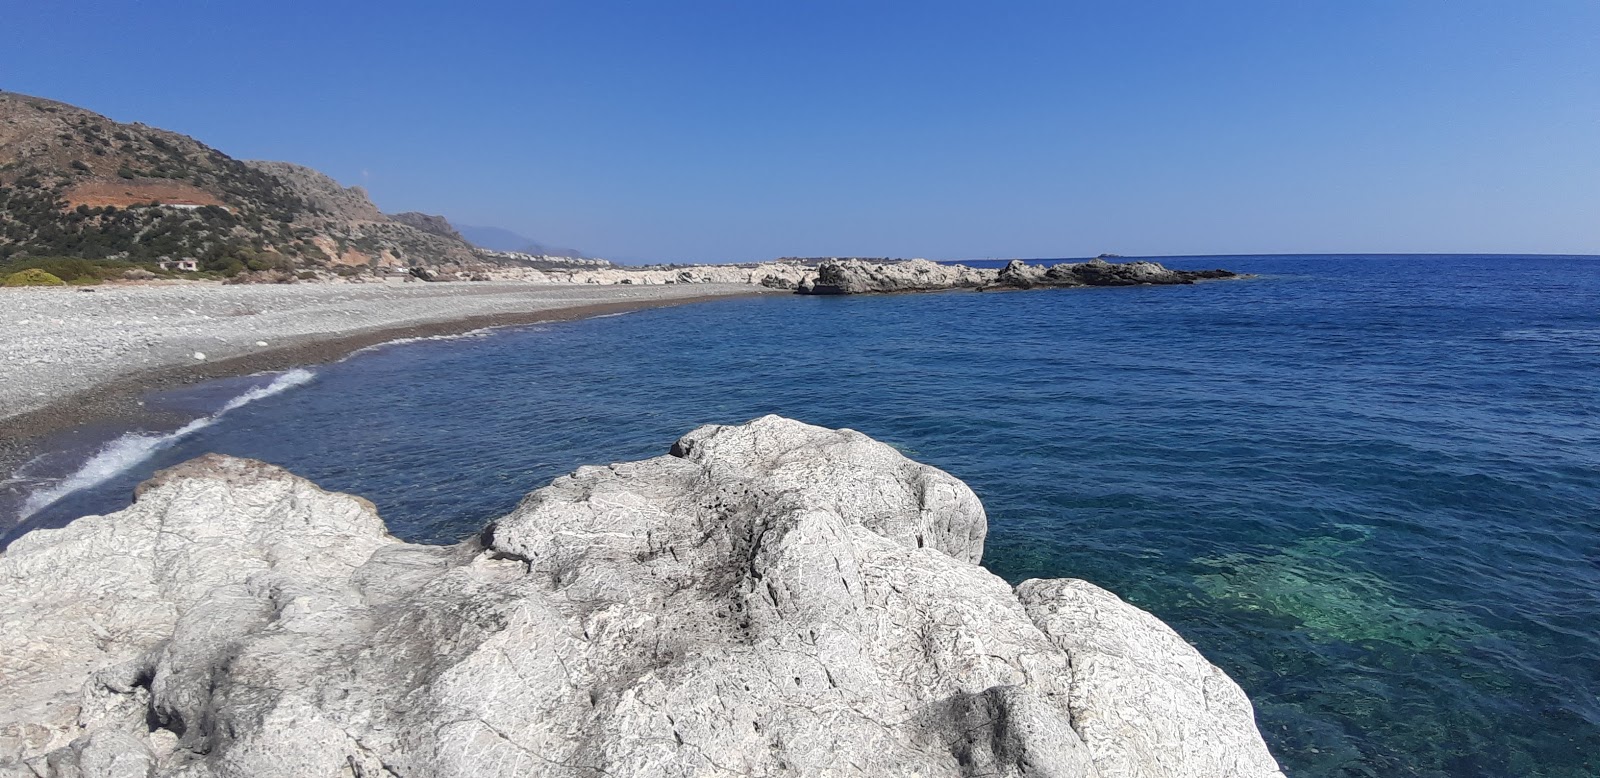 Photo of Plakaki beach with gray pebble surface